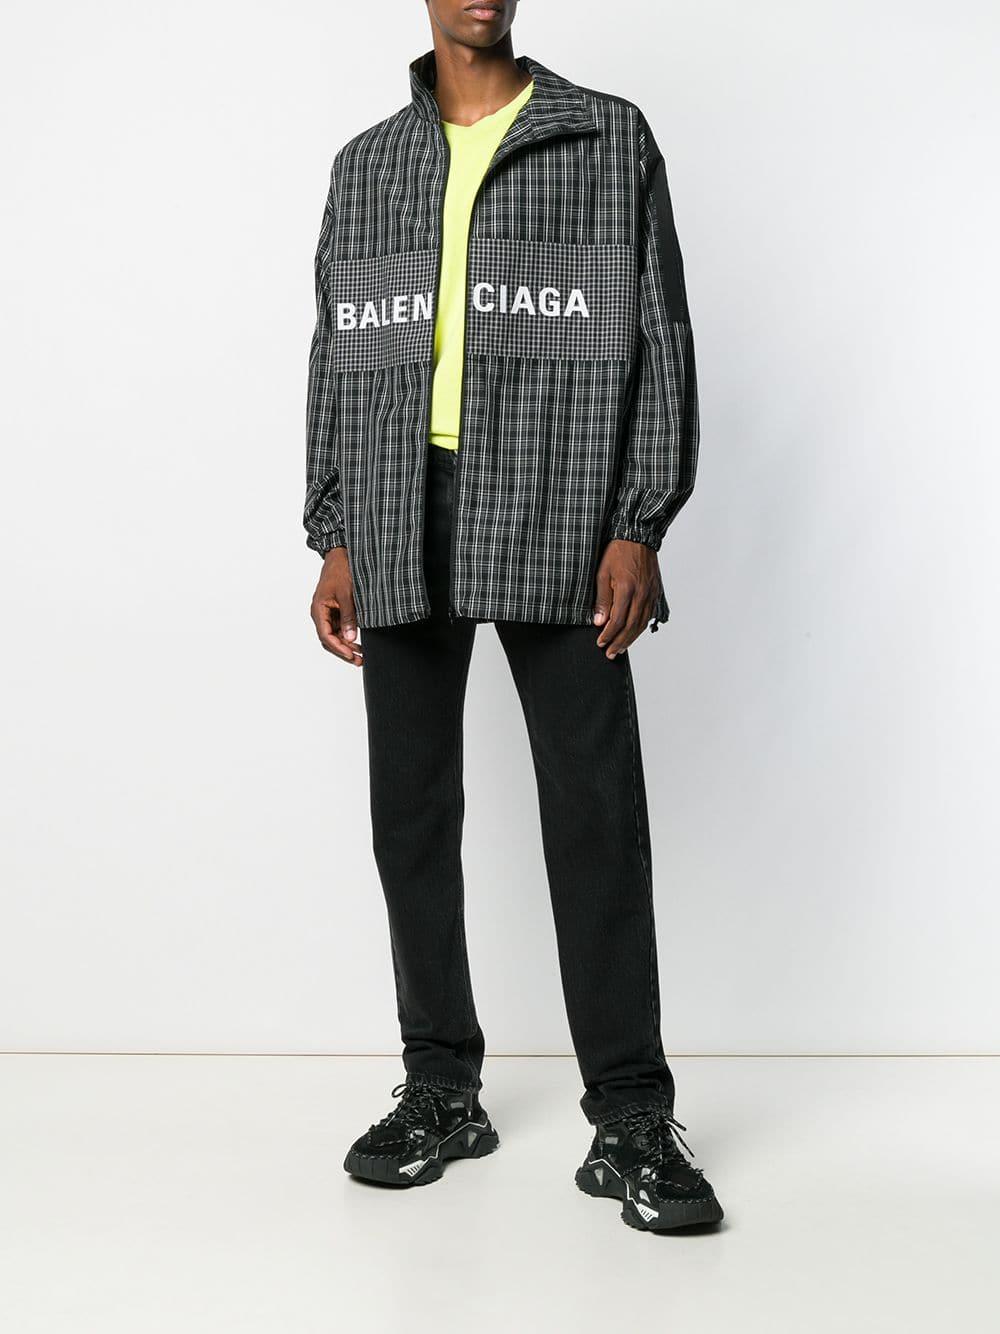 Balenciaga Tracksuit Jacket in Black for Men - Lyst